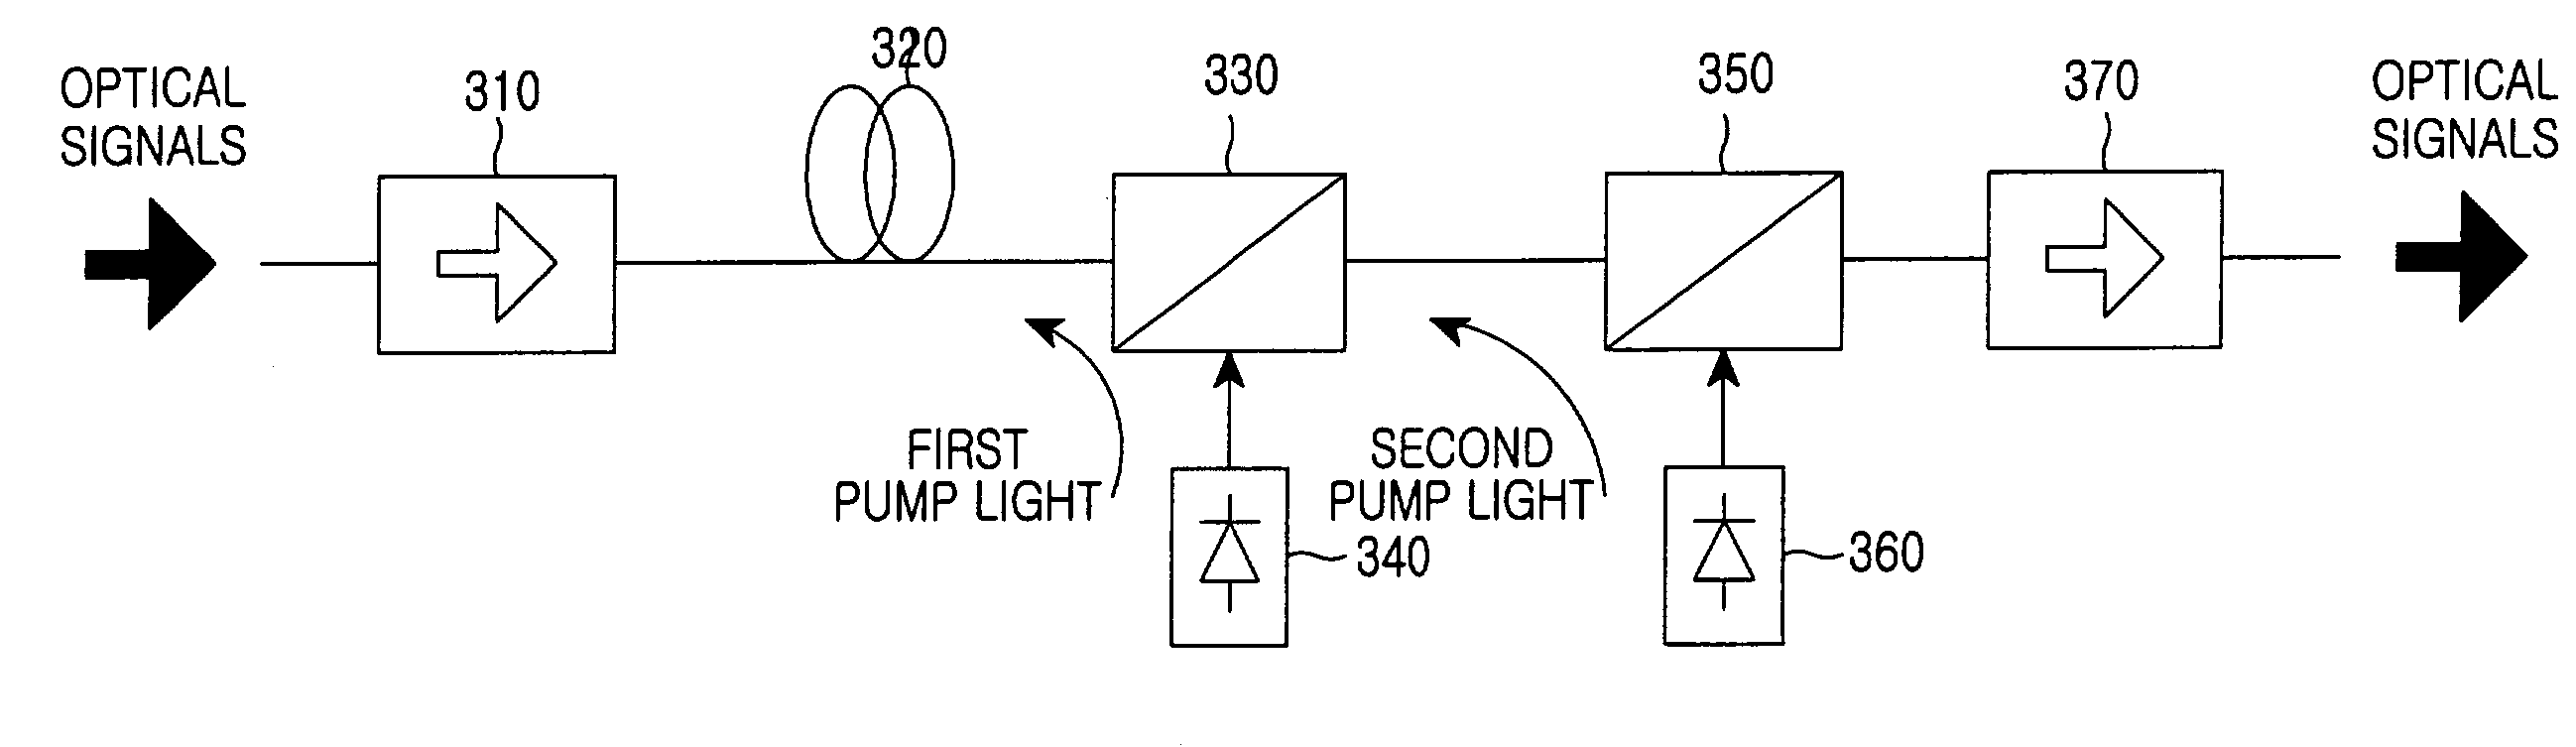 Wideband amplifier with erbium-doped fiber